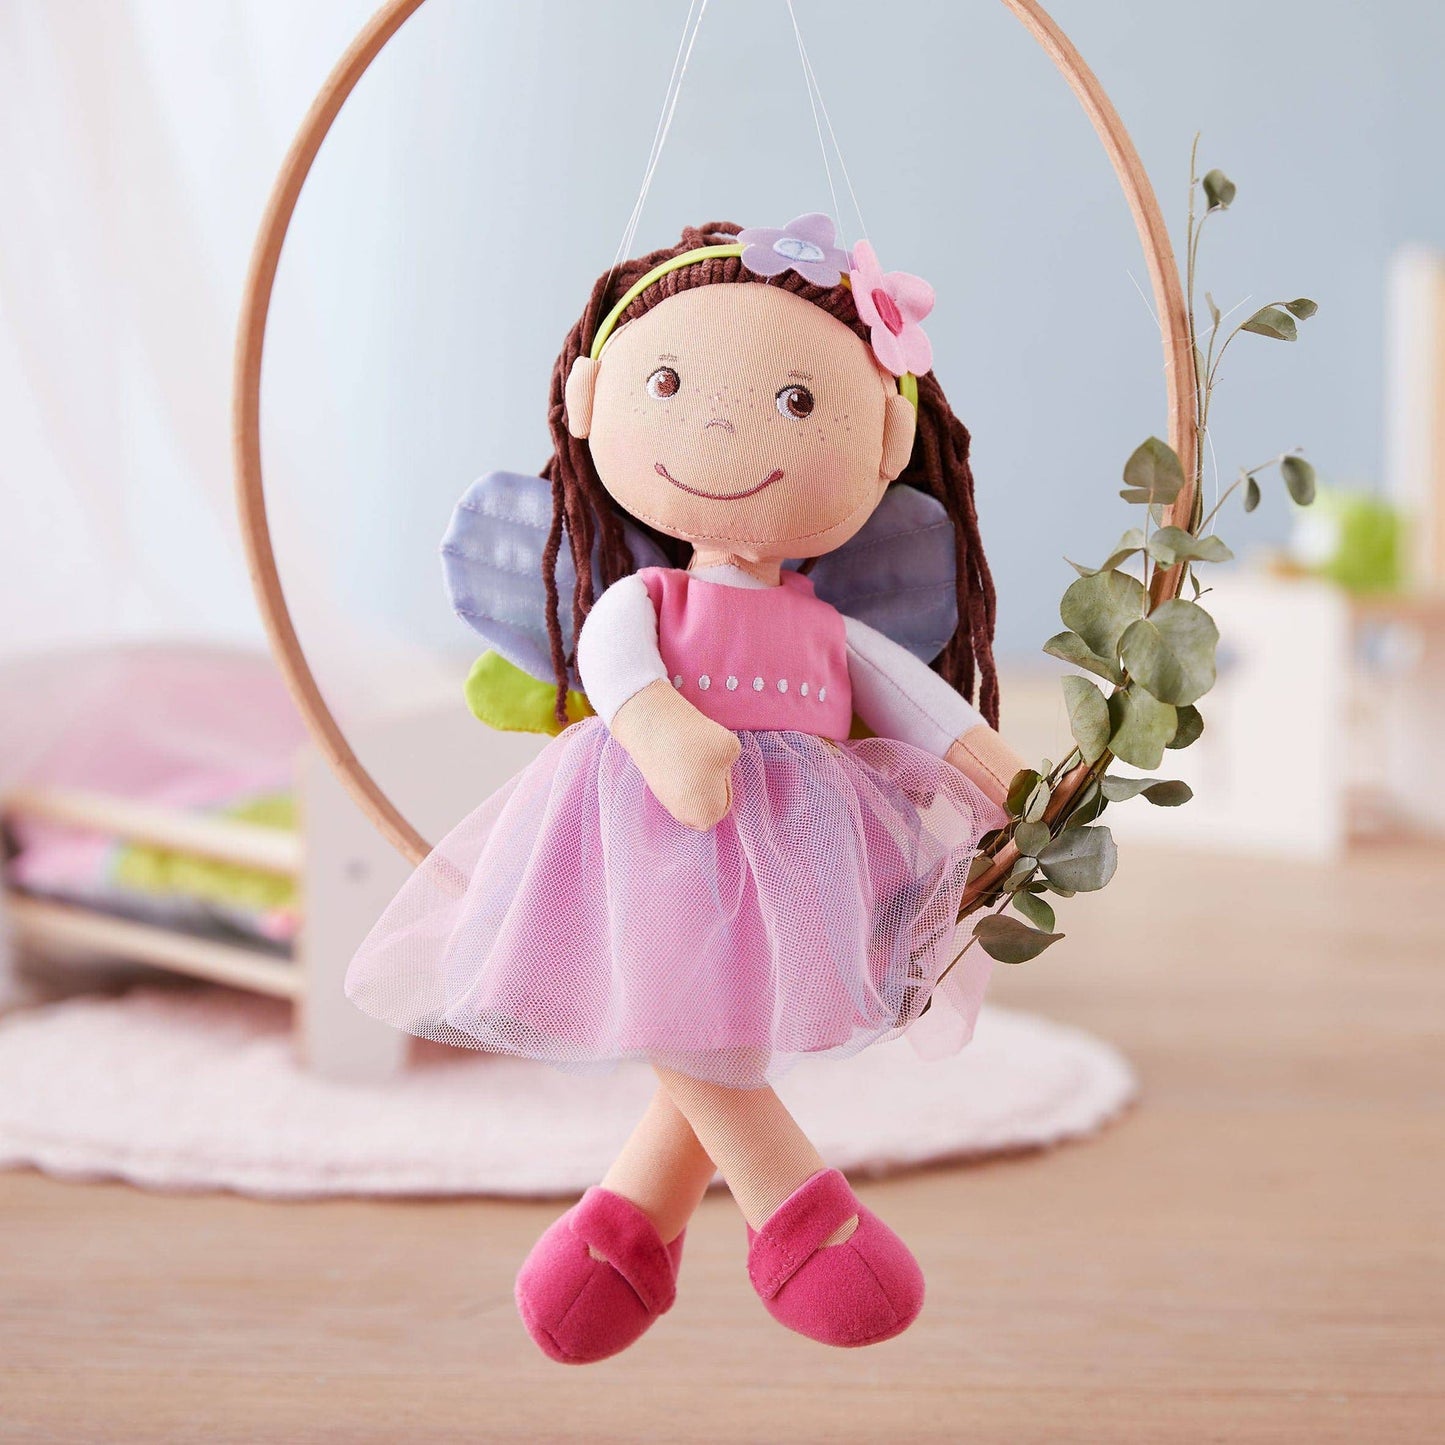 HABA Doll Fairy Magic Dress Set